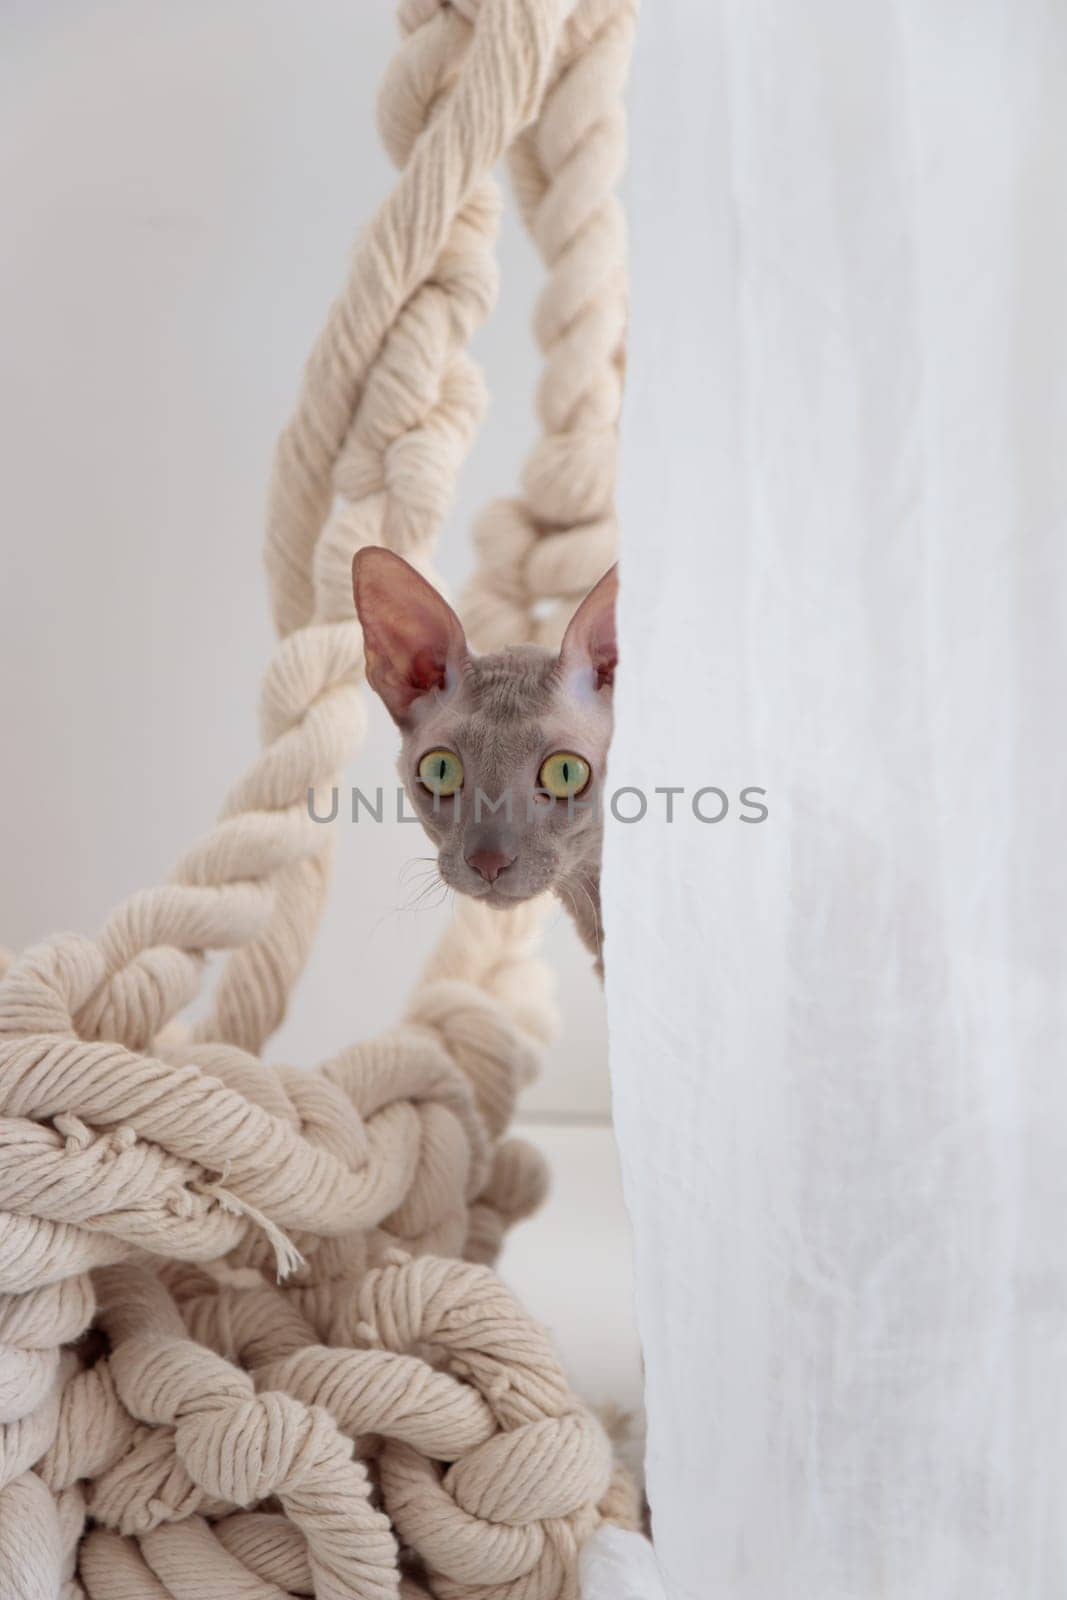 Cute cornish rex cat peeking out from behind curtain